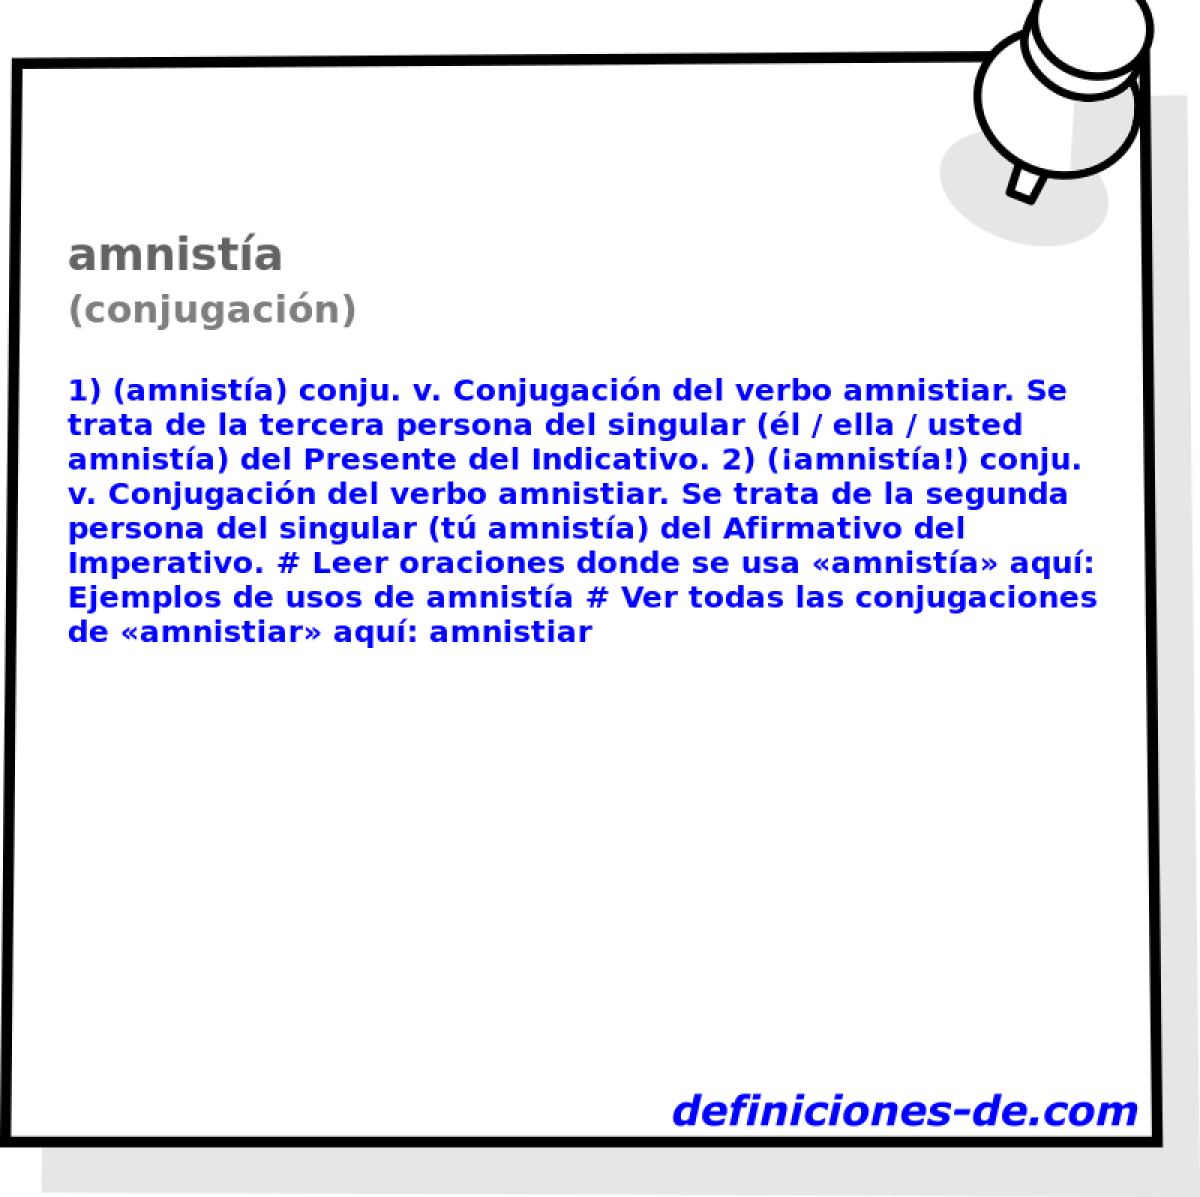 amnista (conjugacin)